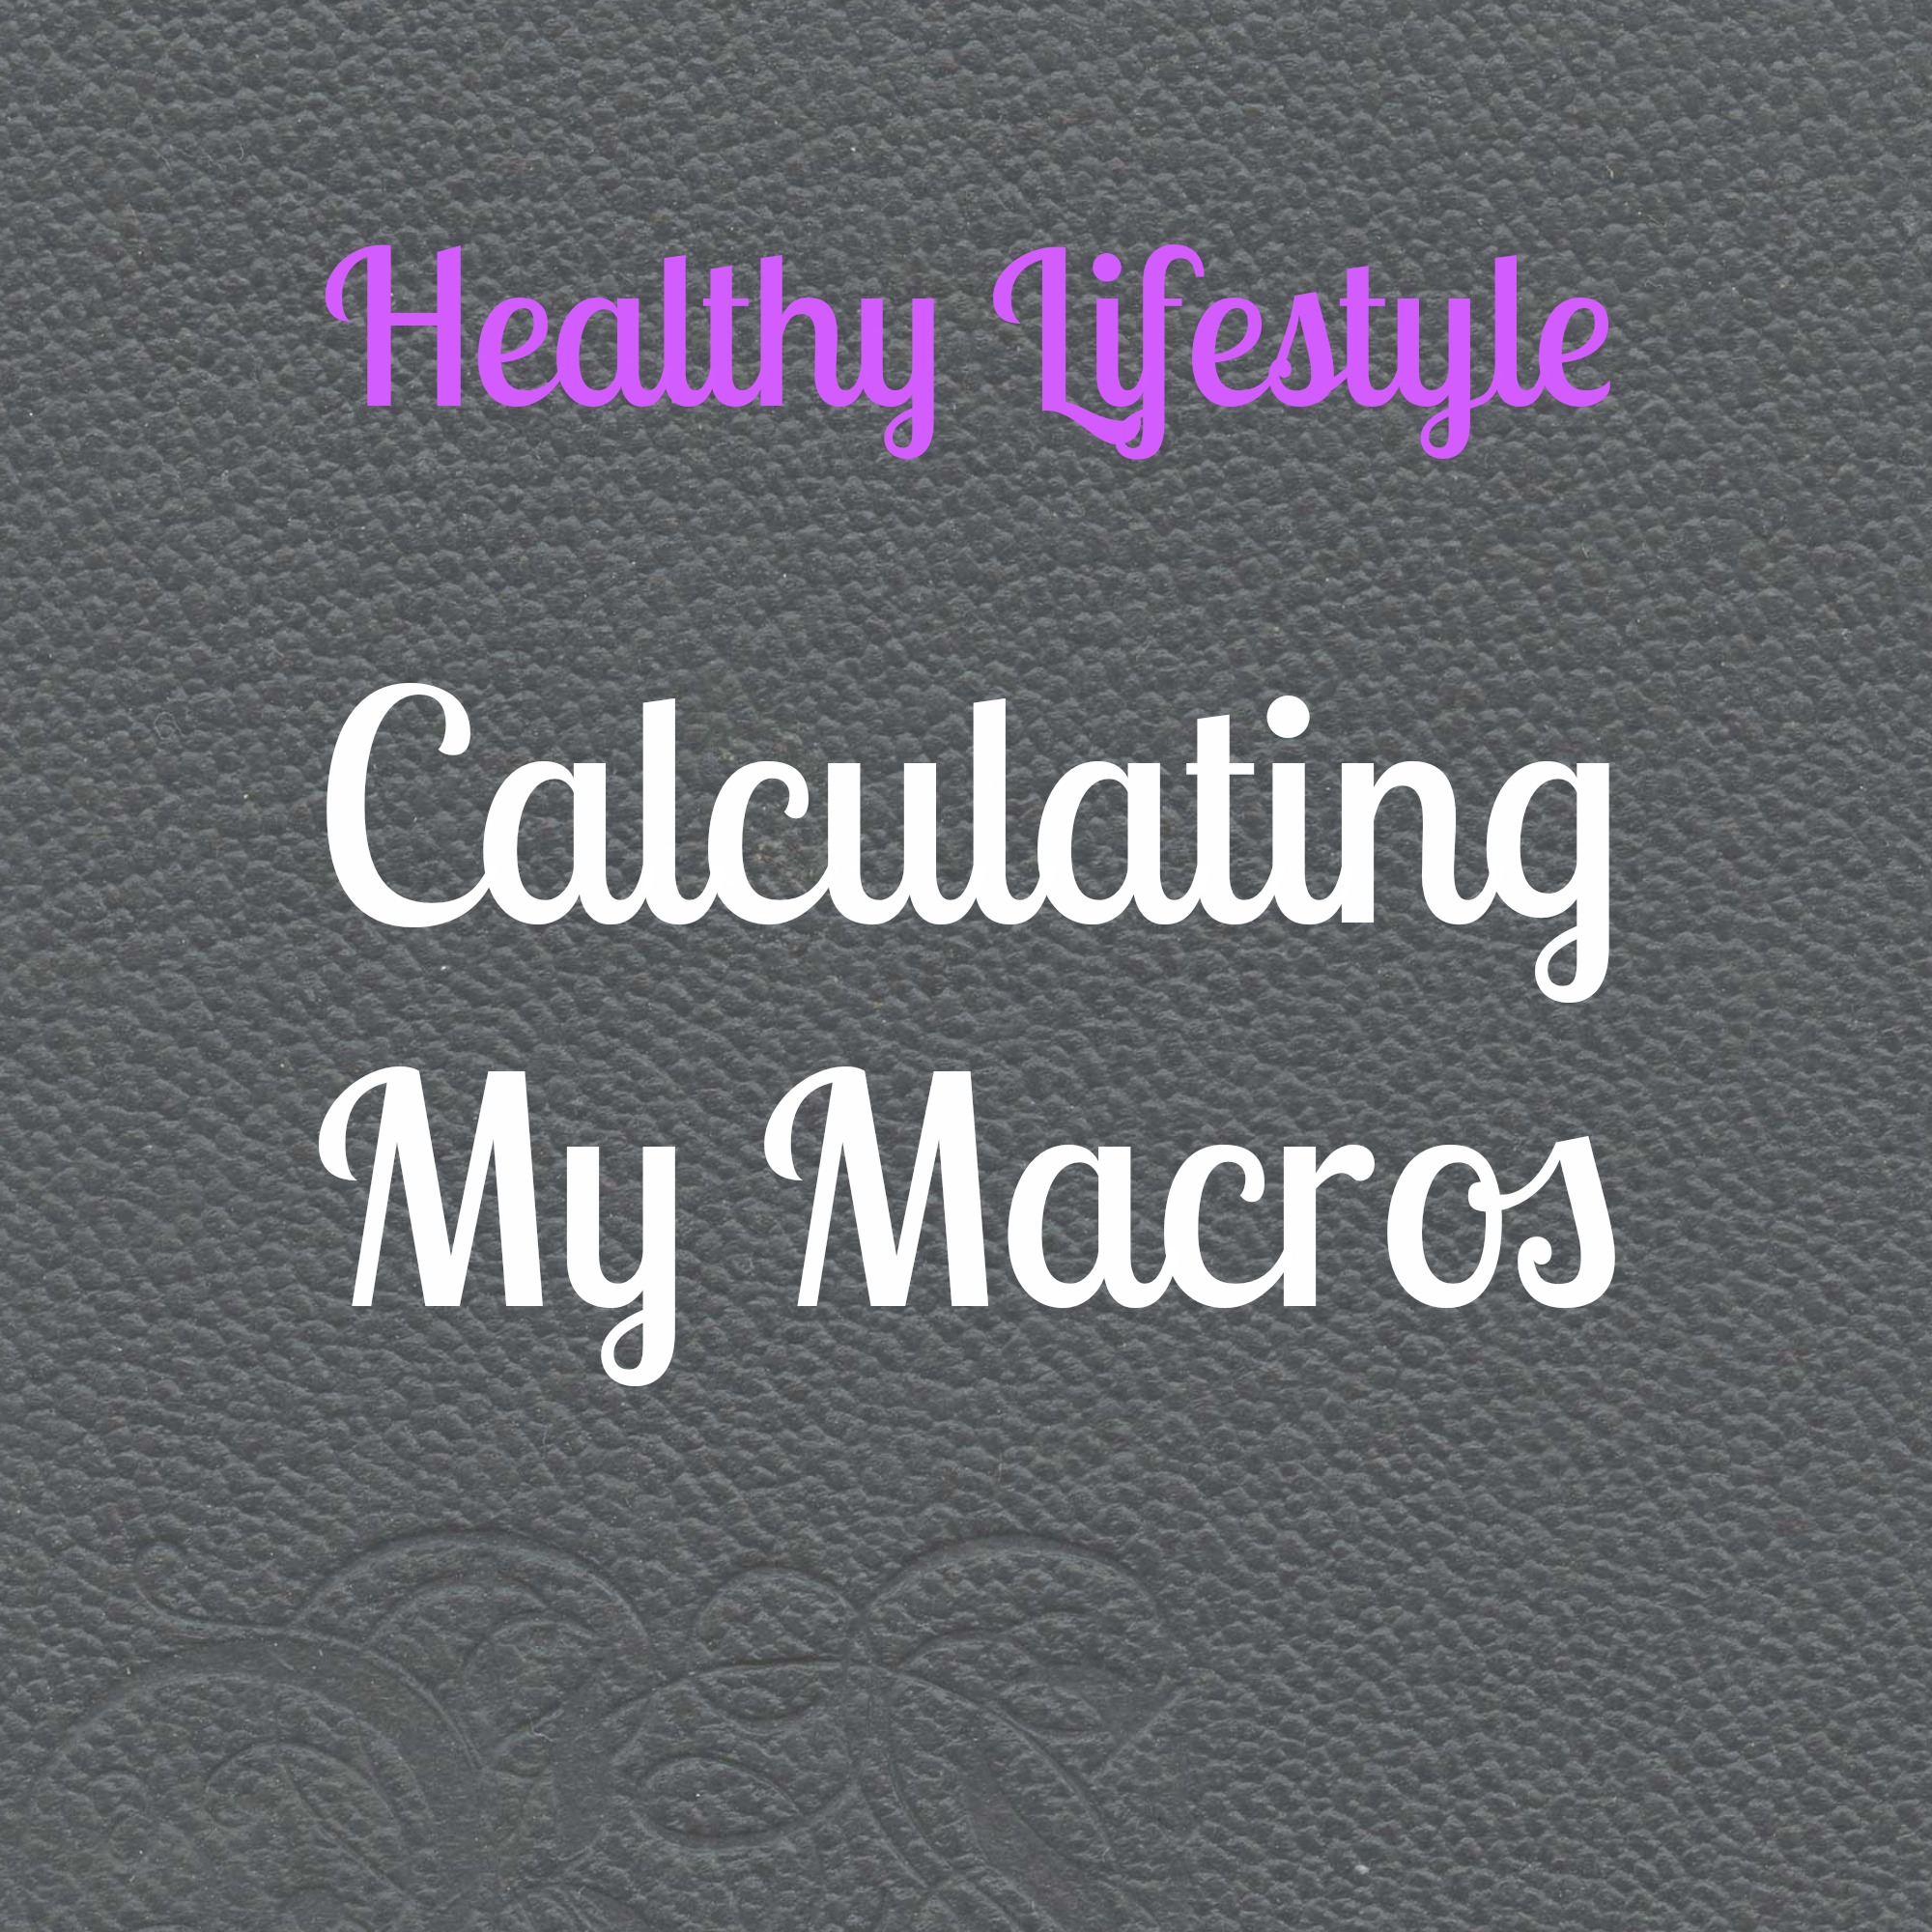 Calculating My Macros